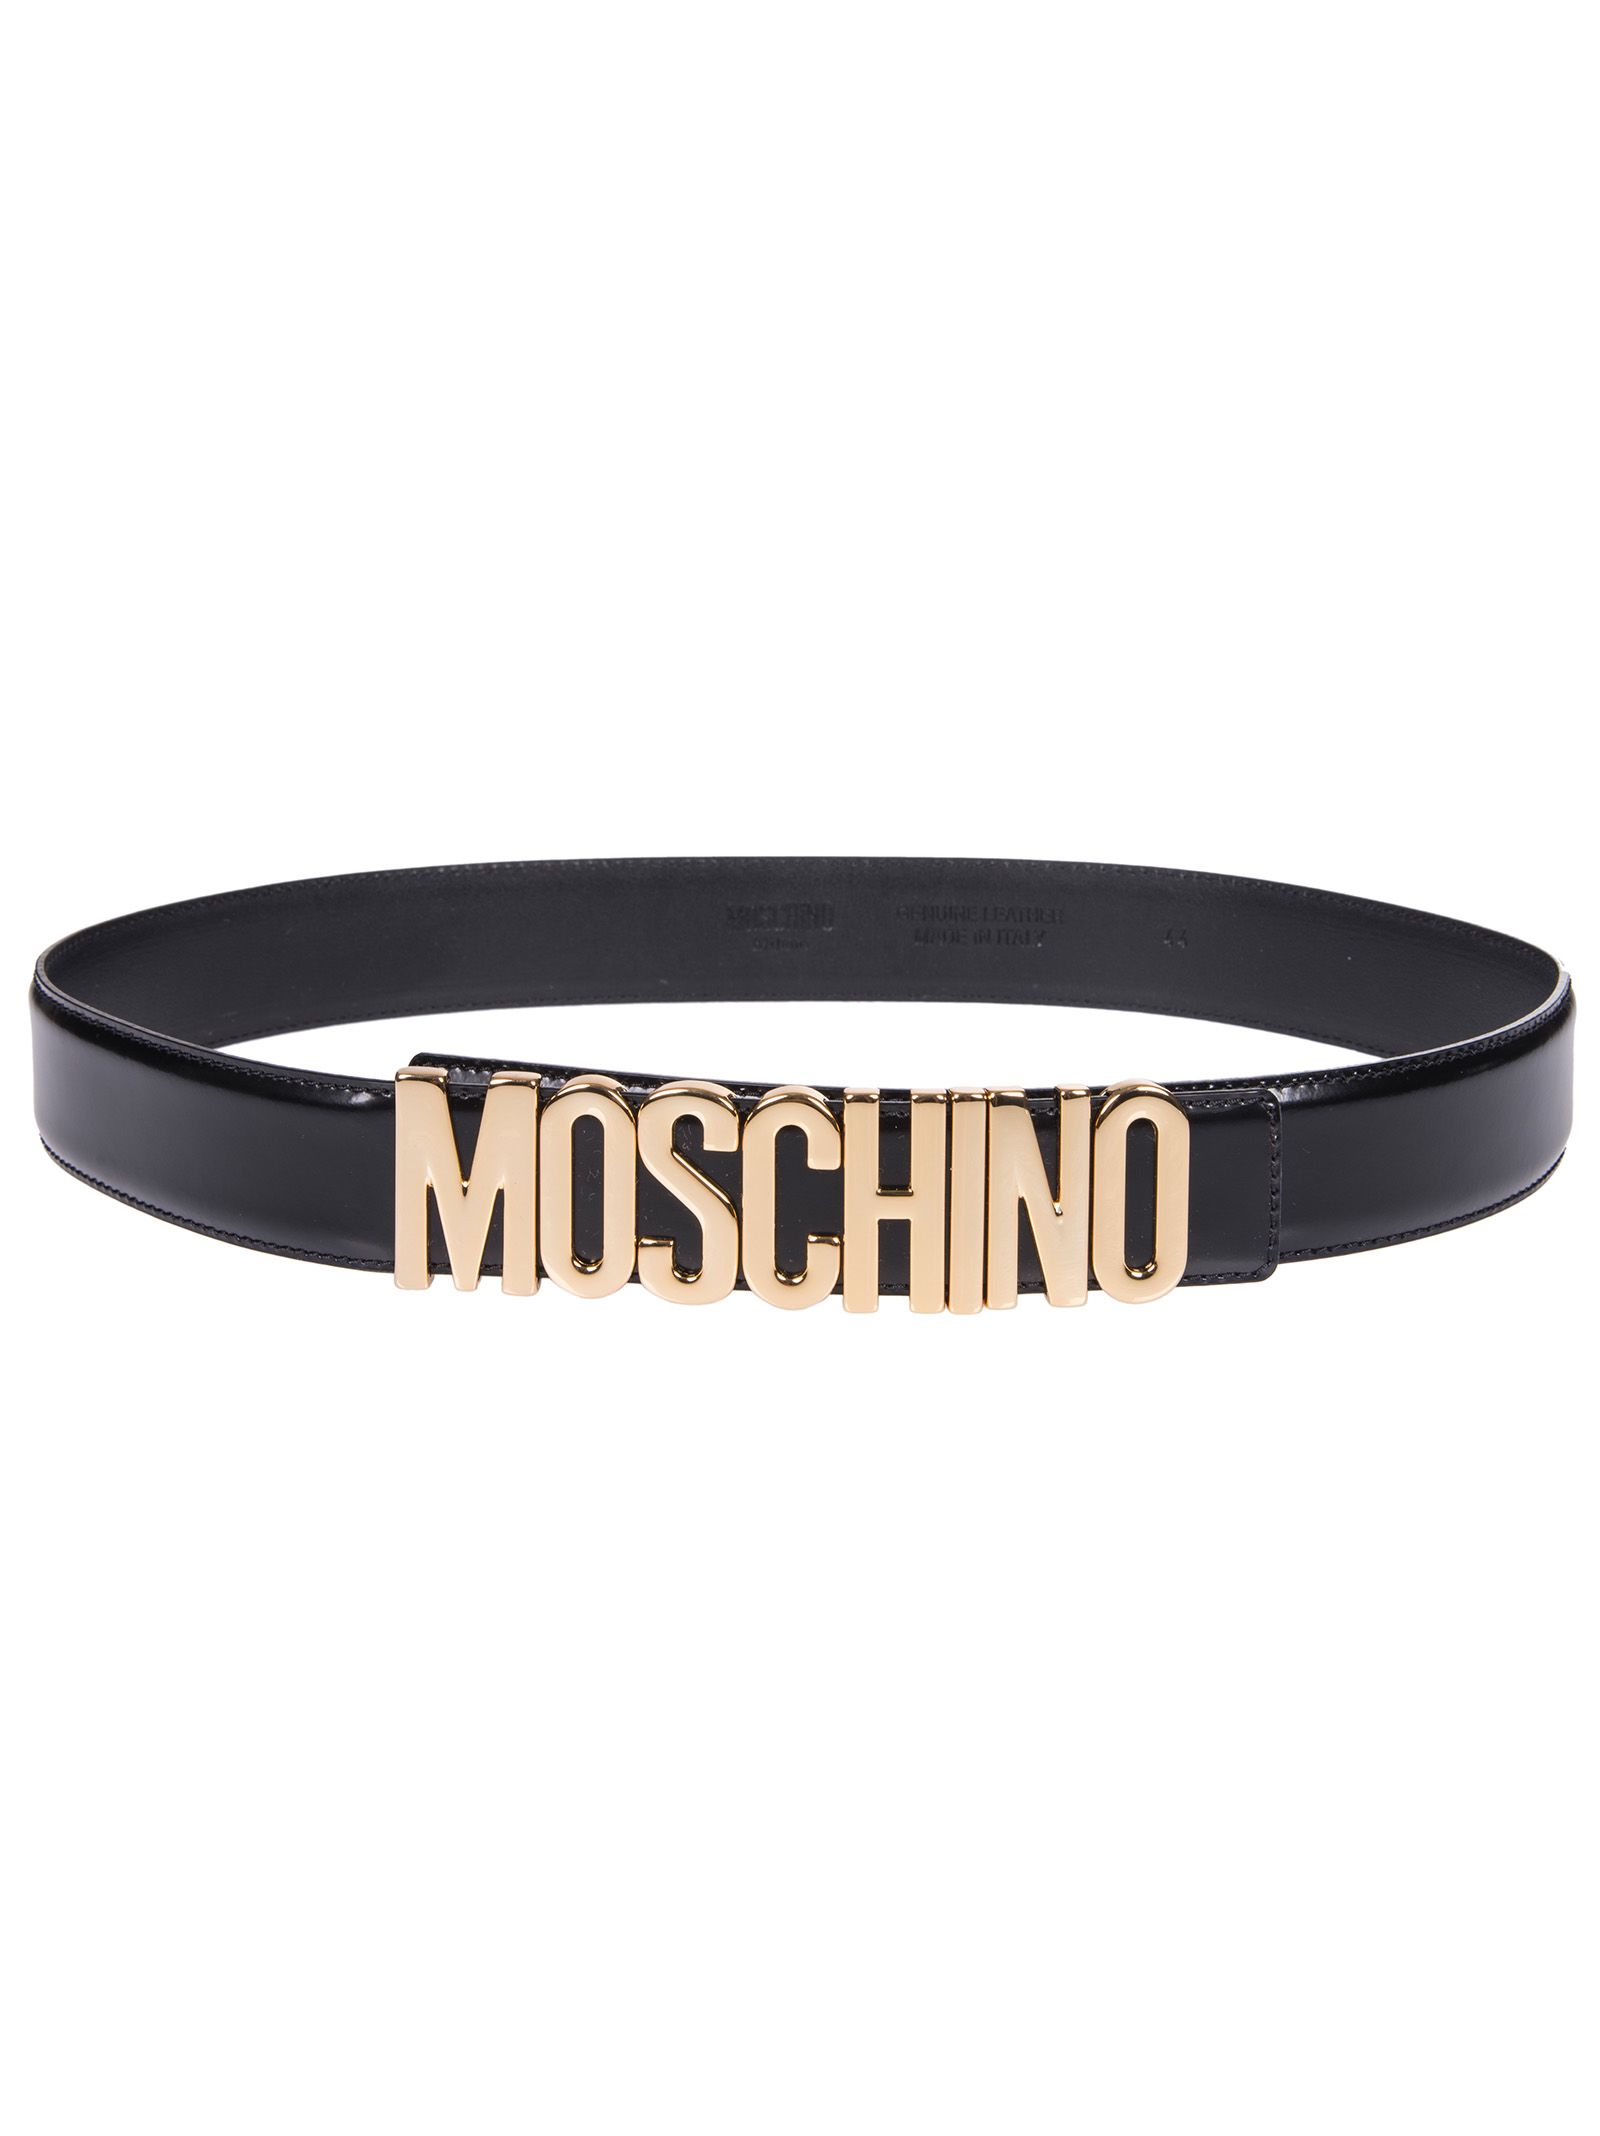 Moschino - Moschino Logo Plaque Belt - Black, Women's Belts | Italist